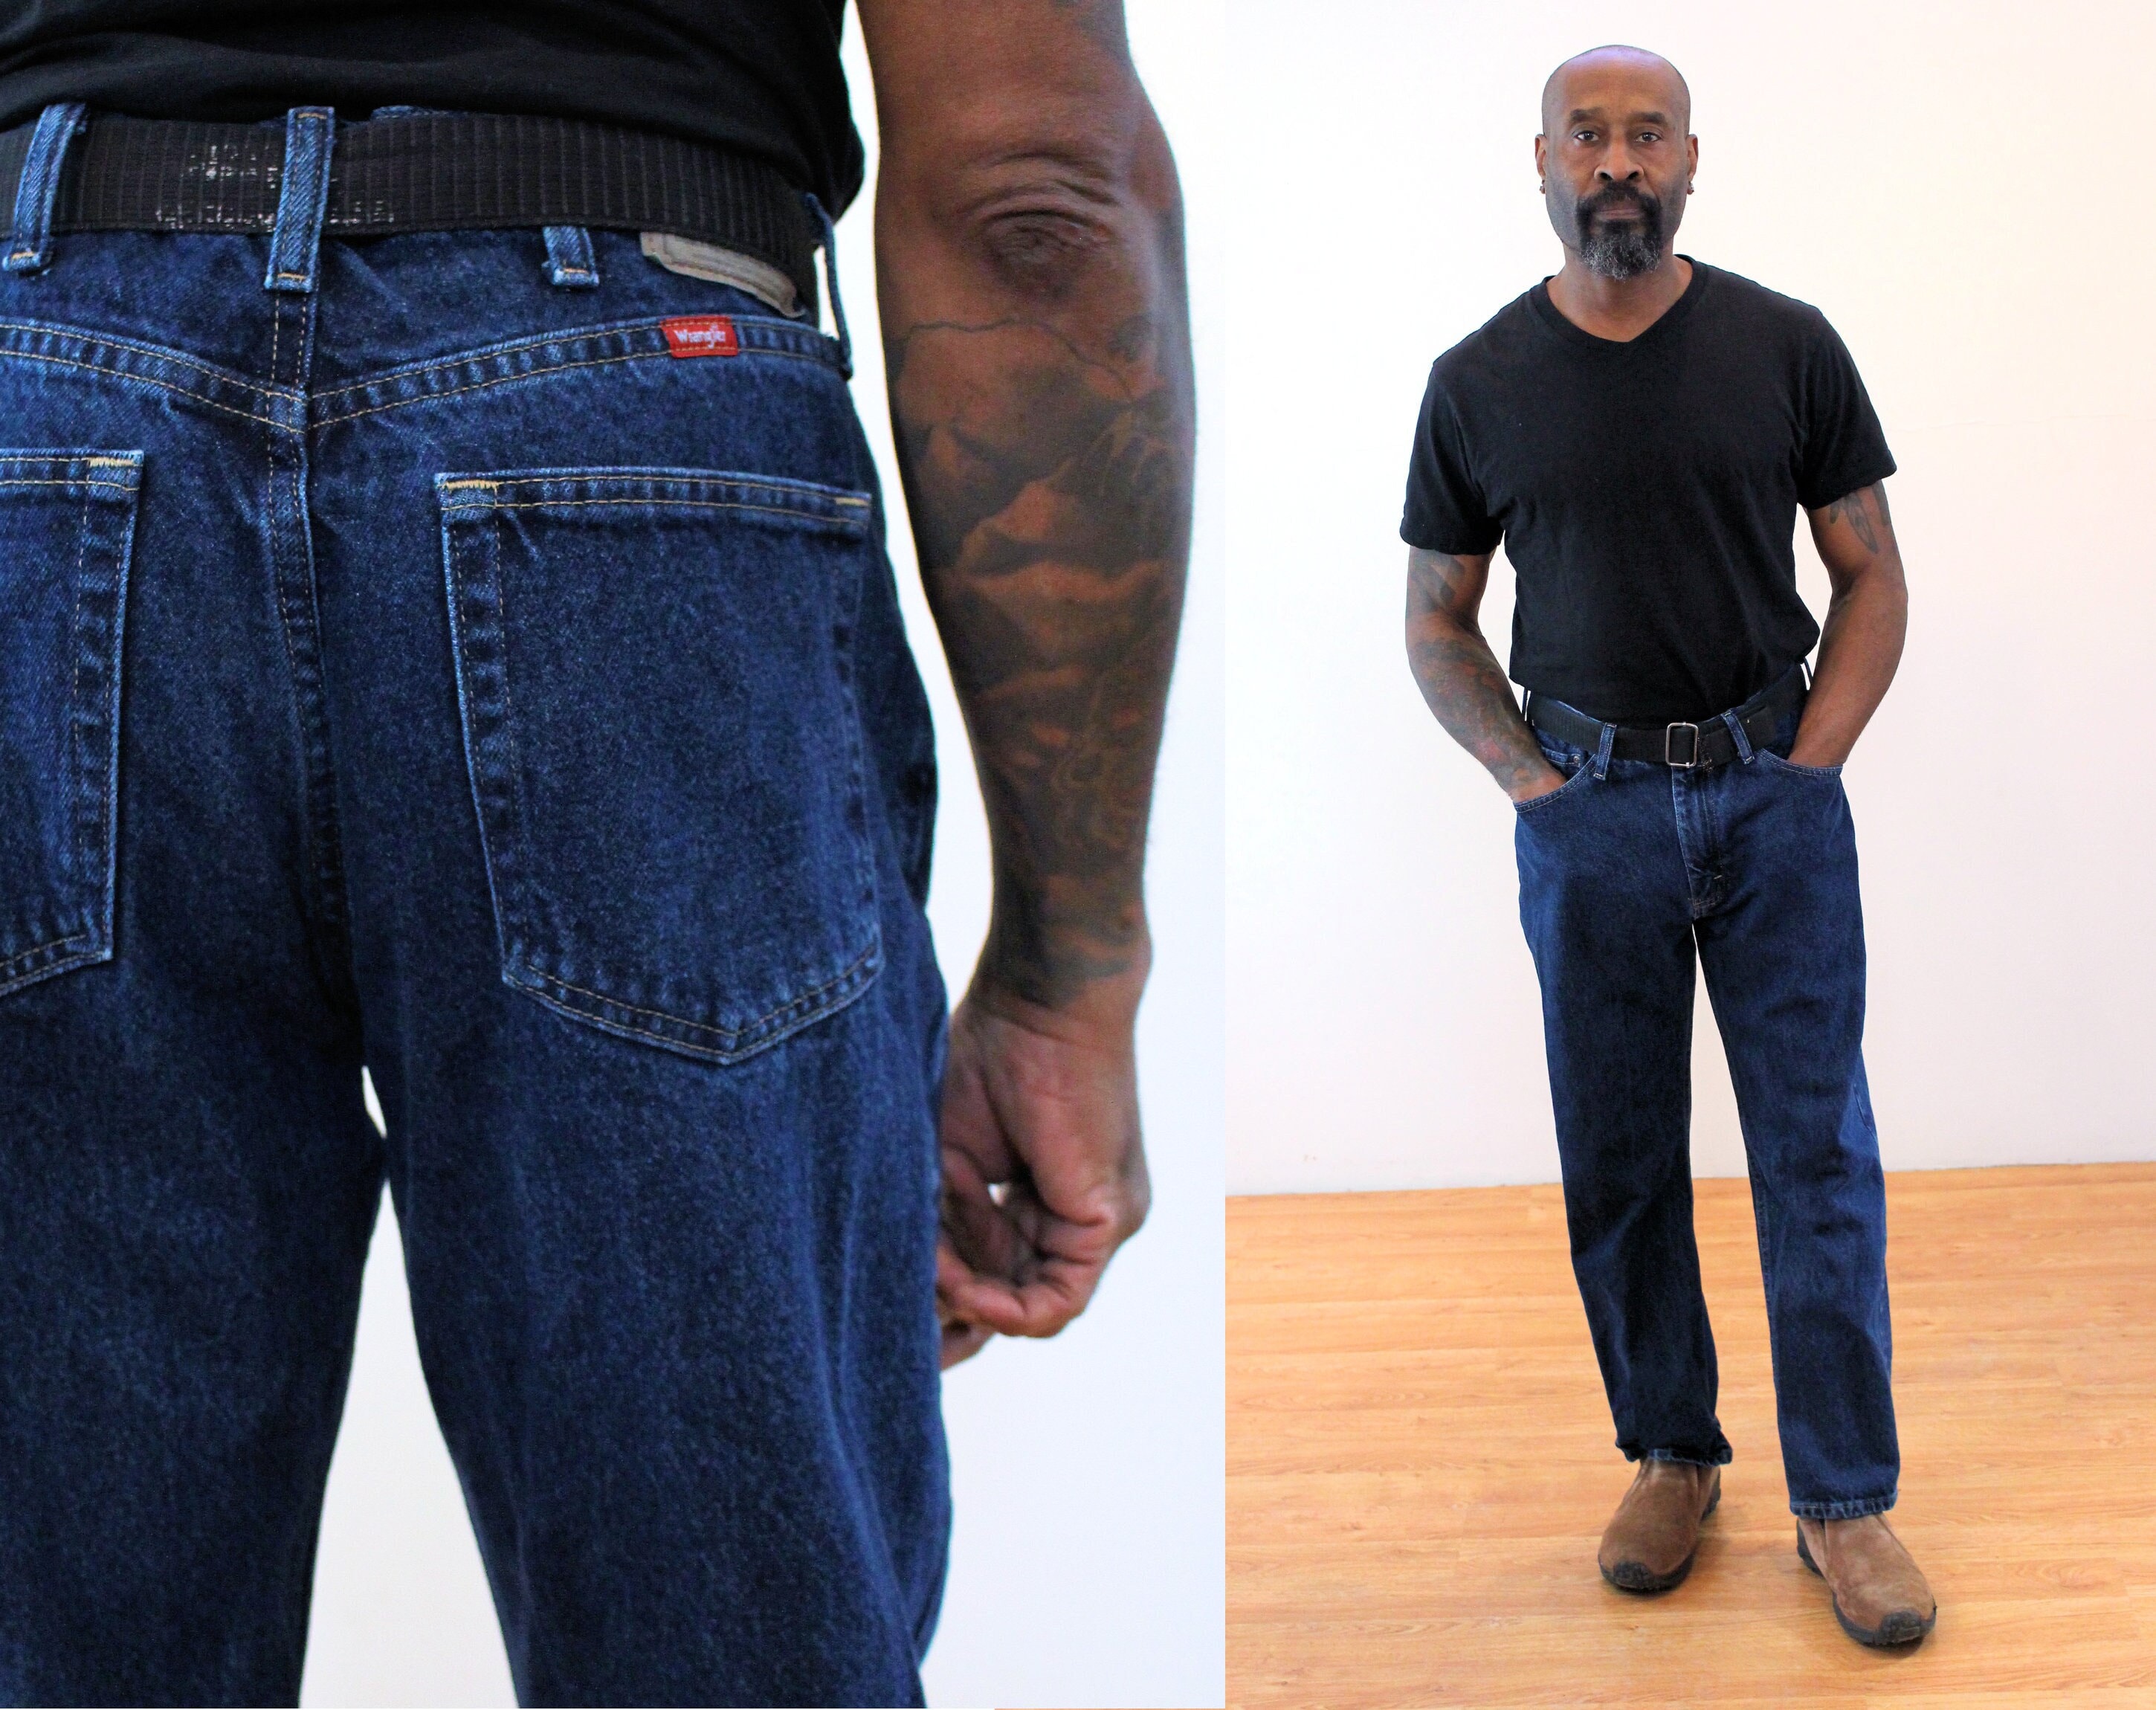 90s Wrangler Jeans 34 X 29 Vintage Dark Blue Wash Cotton - Etsy